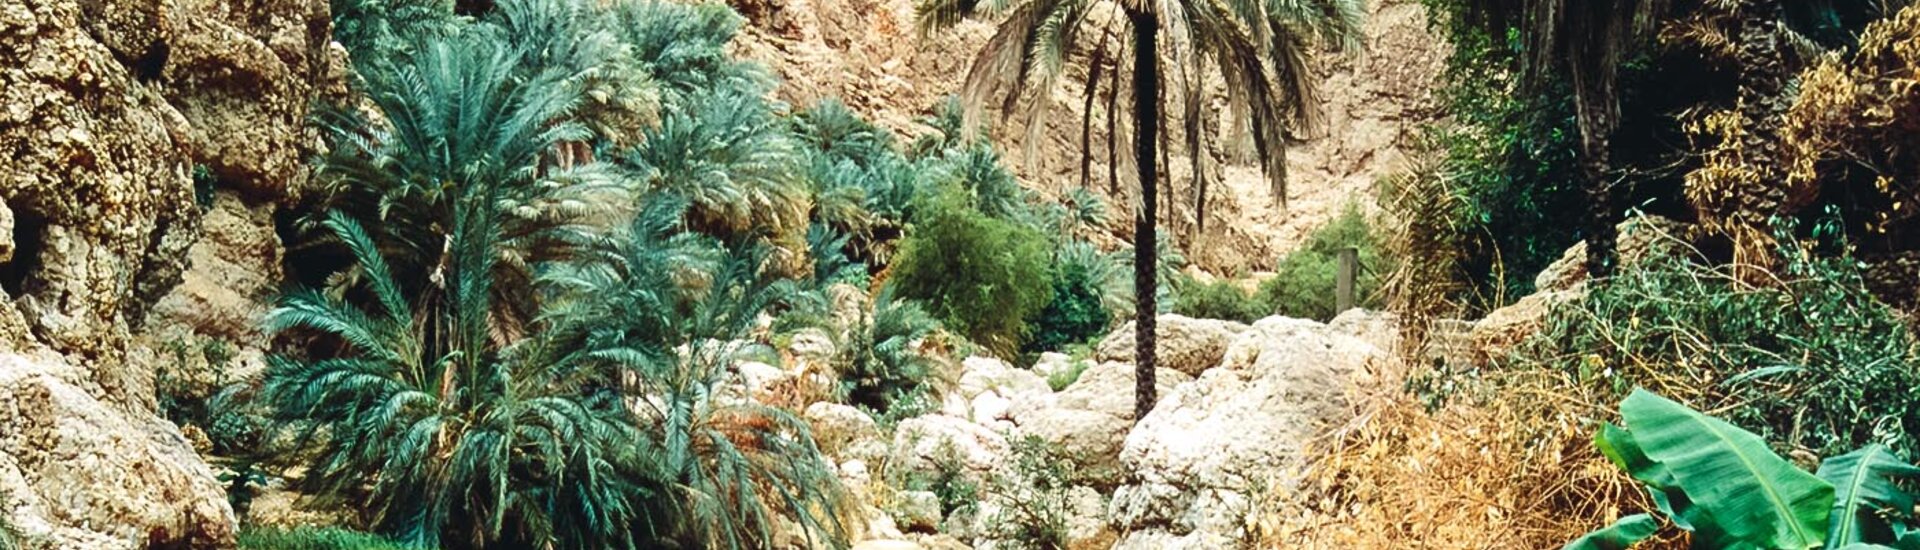 Palmen im Wadi Shab, Oman